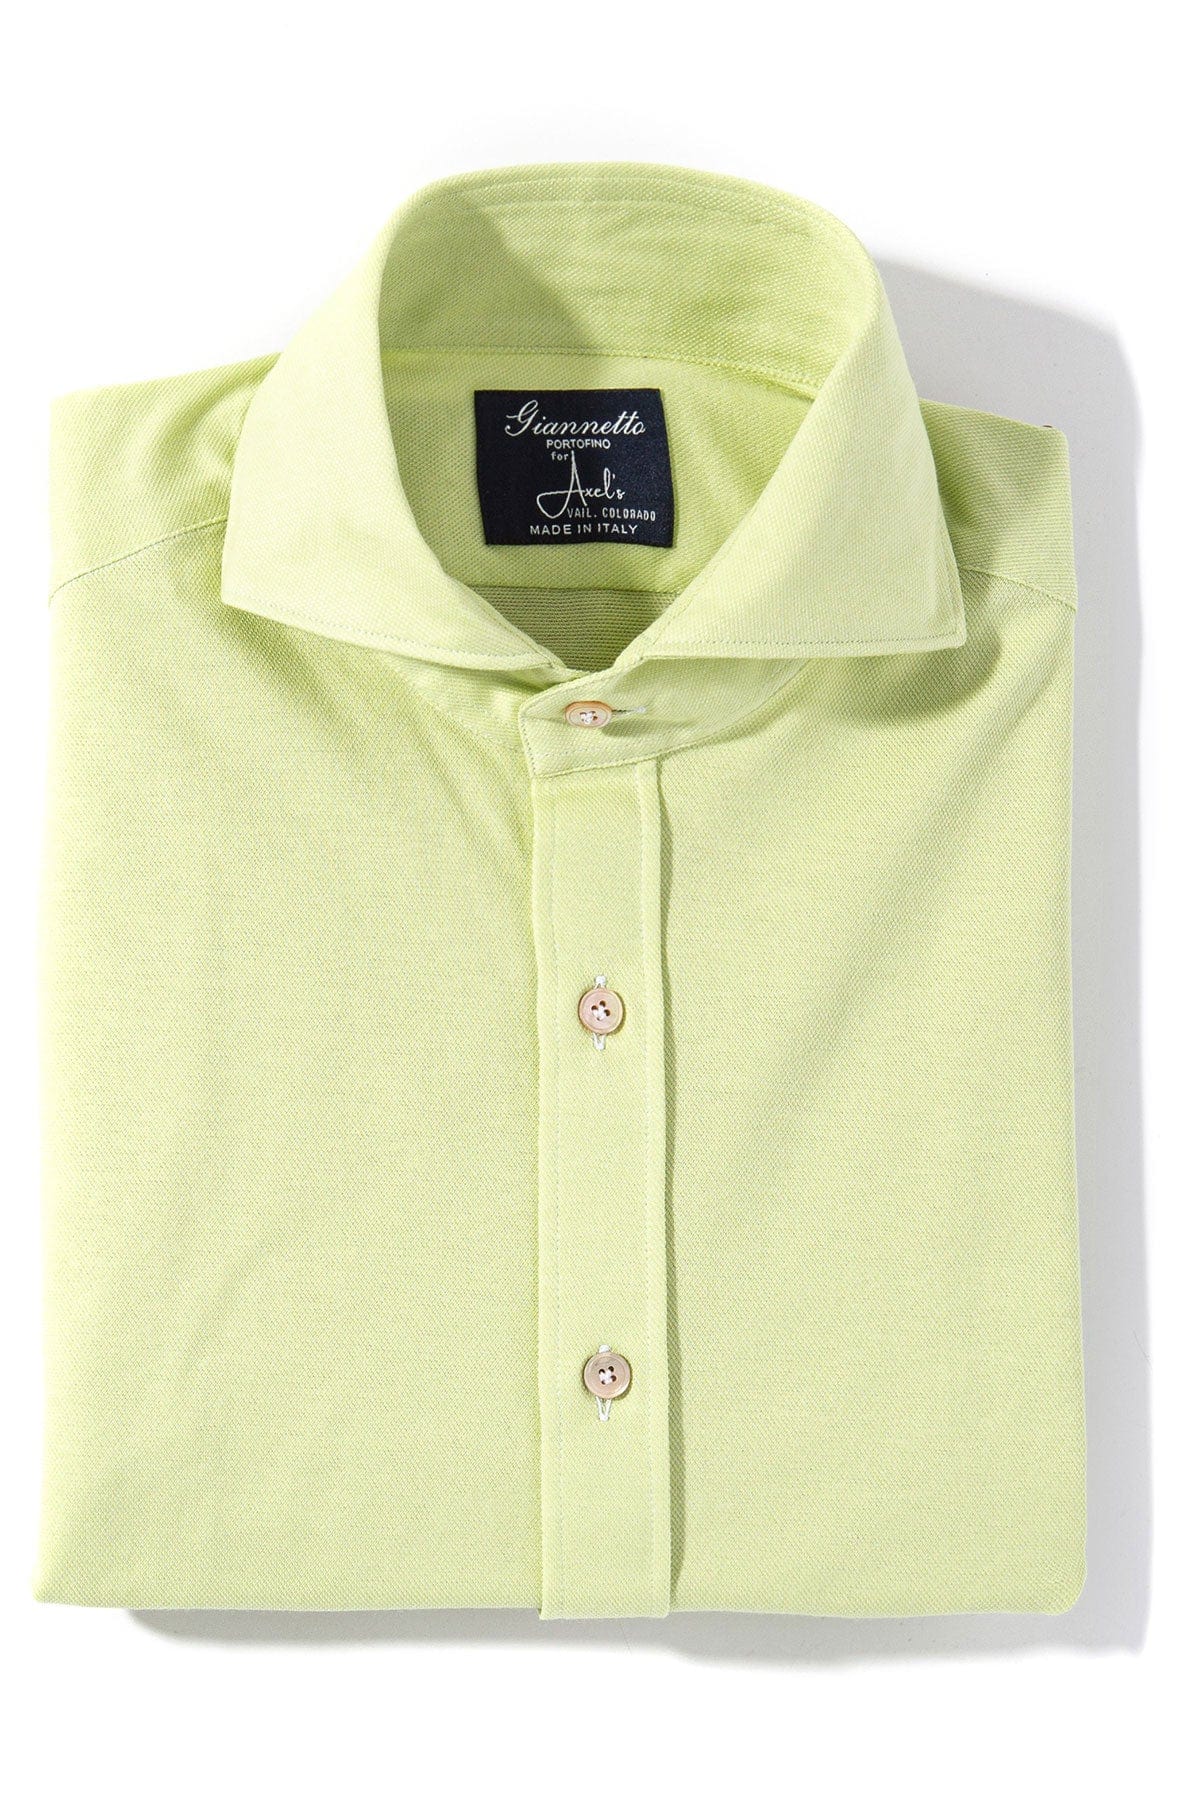 Menerbes Jersey Shirt in Lime Green - AXEL'S